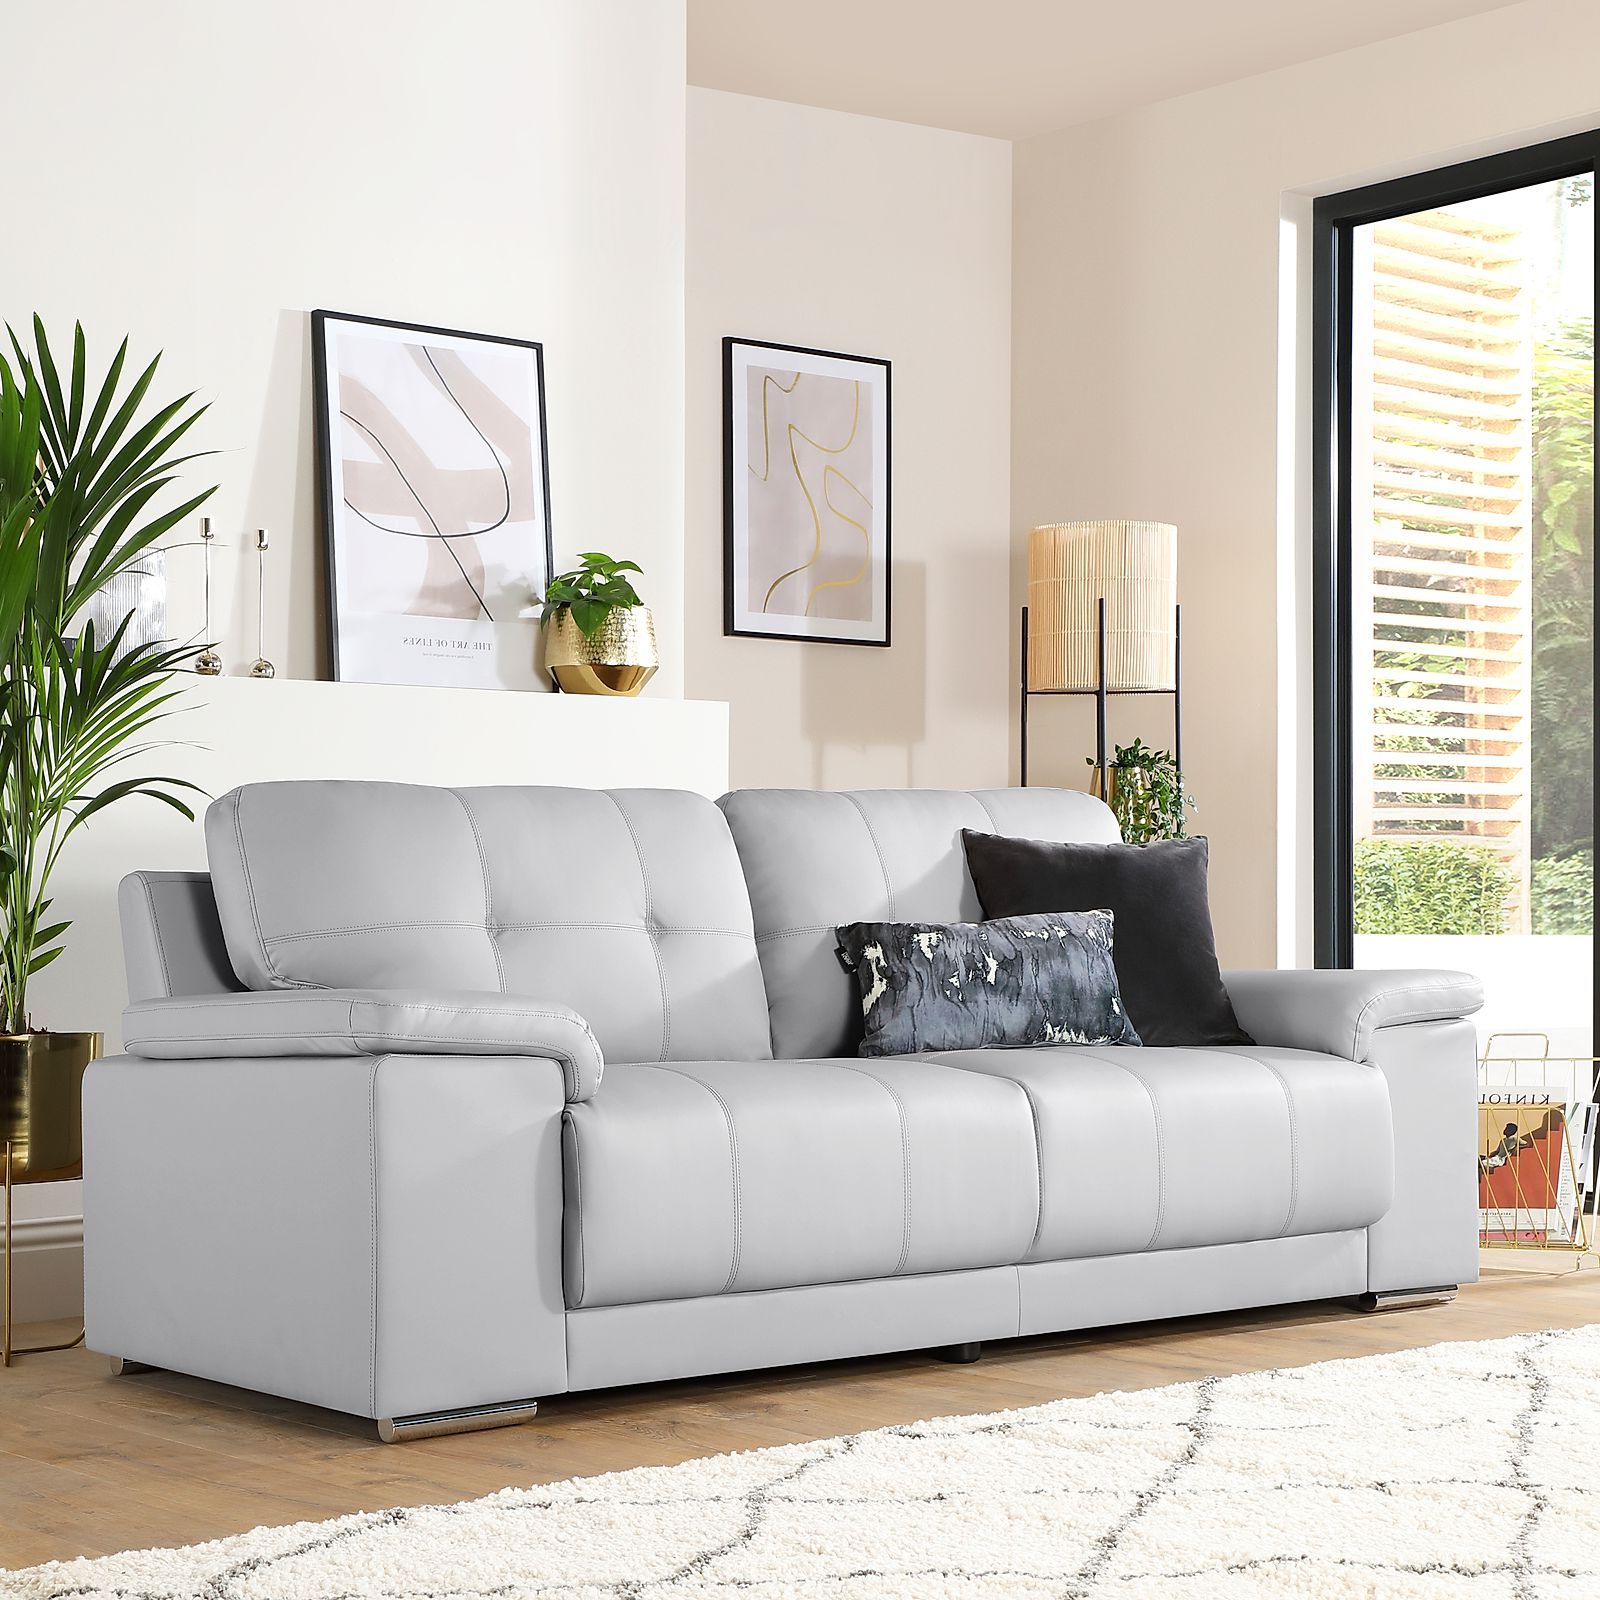 Kansas Light Grey Leather 3 Seater Sofa | Furniture Choice Regarding Sofas In Light Gray (View 4 of 20)